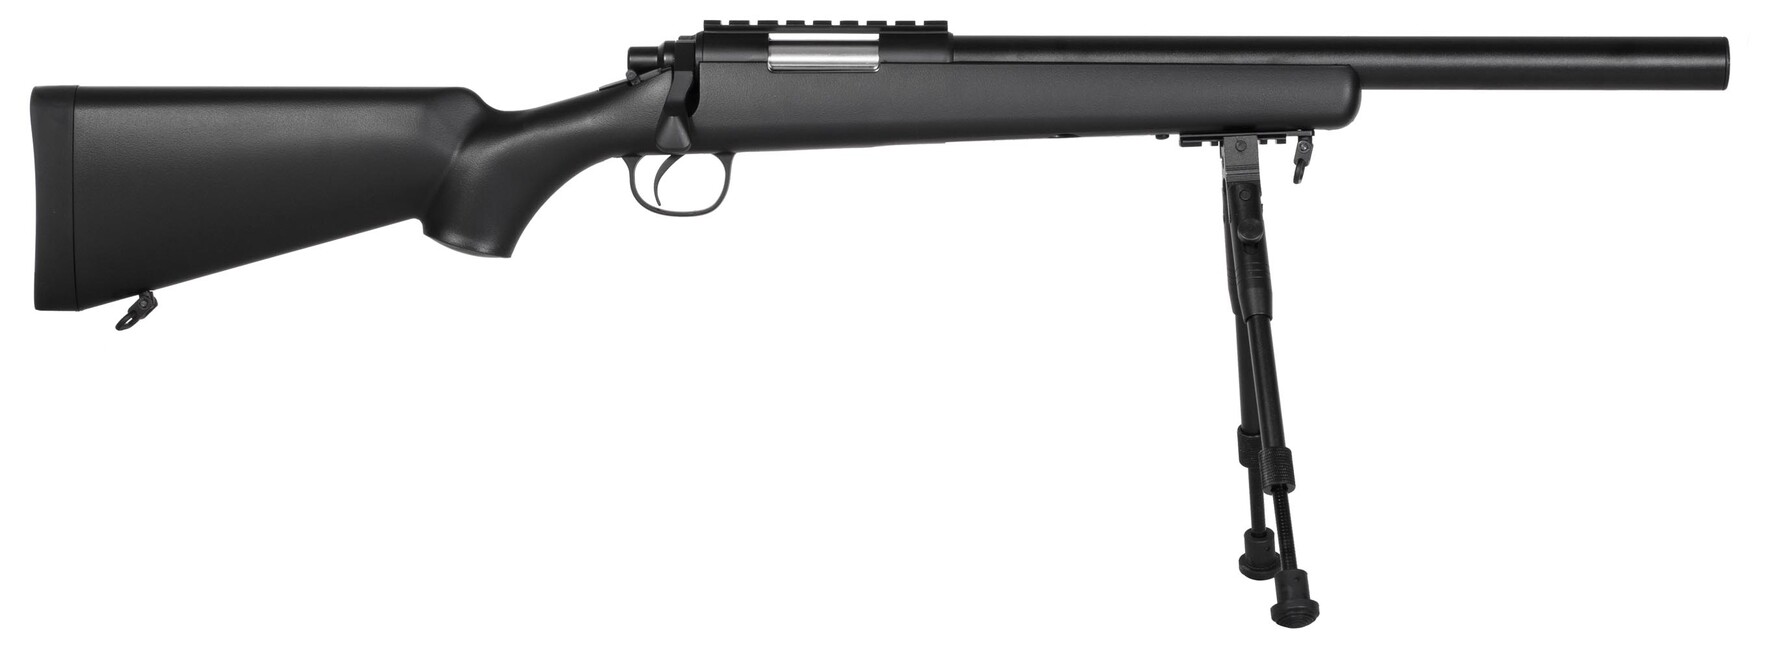 Rifle Airsoft Sniper M96 Cerrojo Resorte Mira Bipoide Bbs 6mm